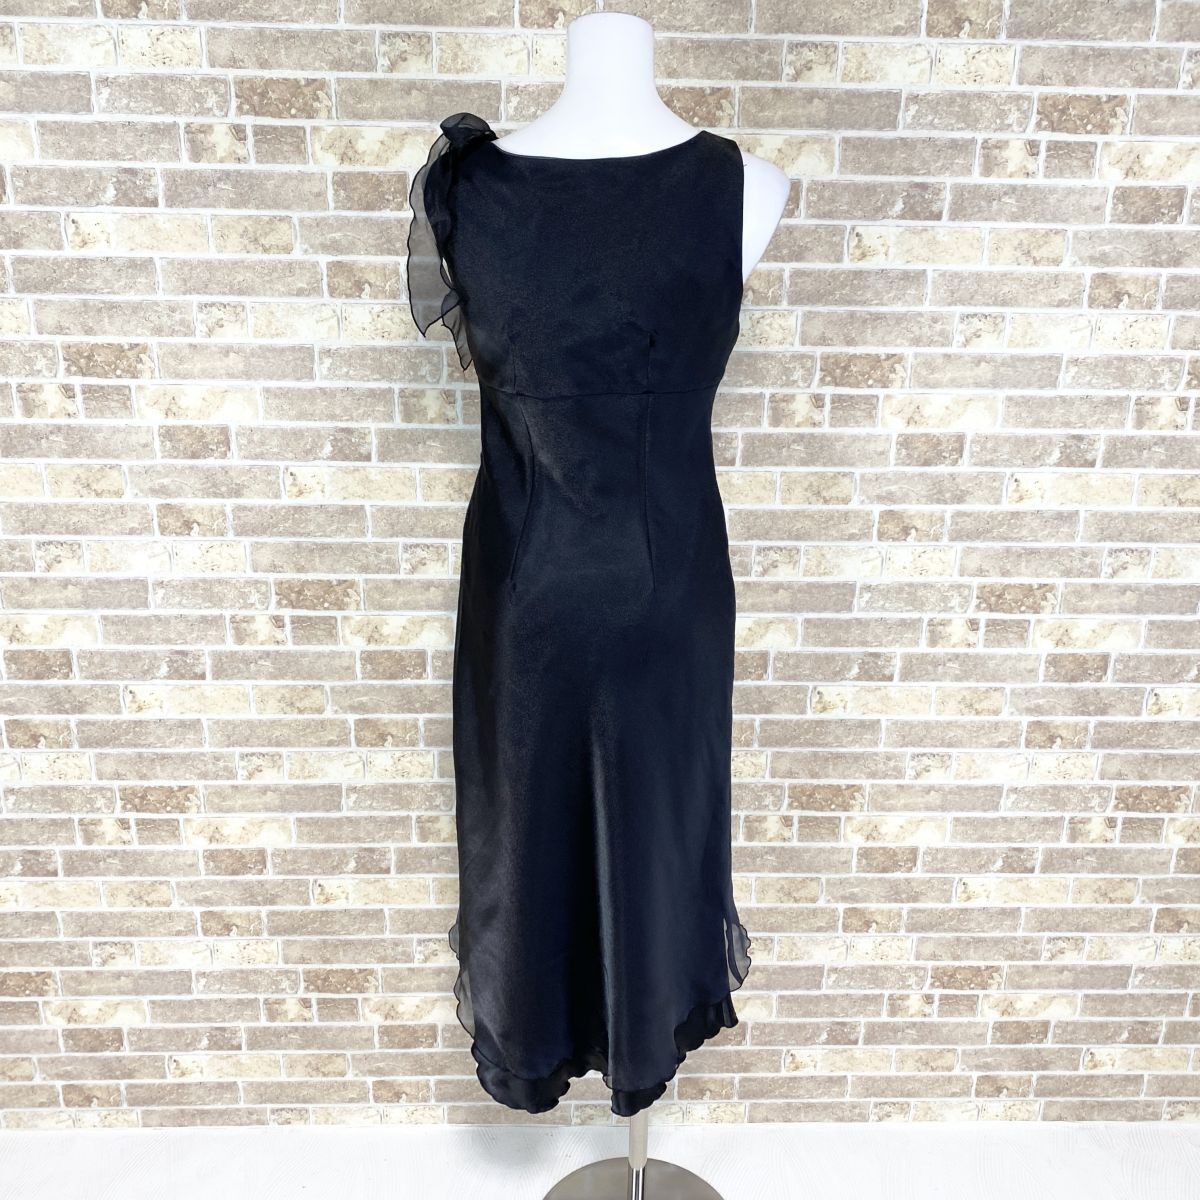 1 jpy dress ROSA Sera bi( stock ) One-piece 9AR black color dress kyabadore presentation Event used 4182